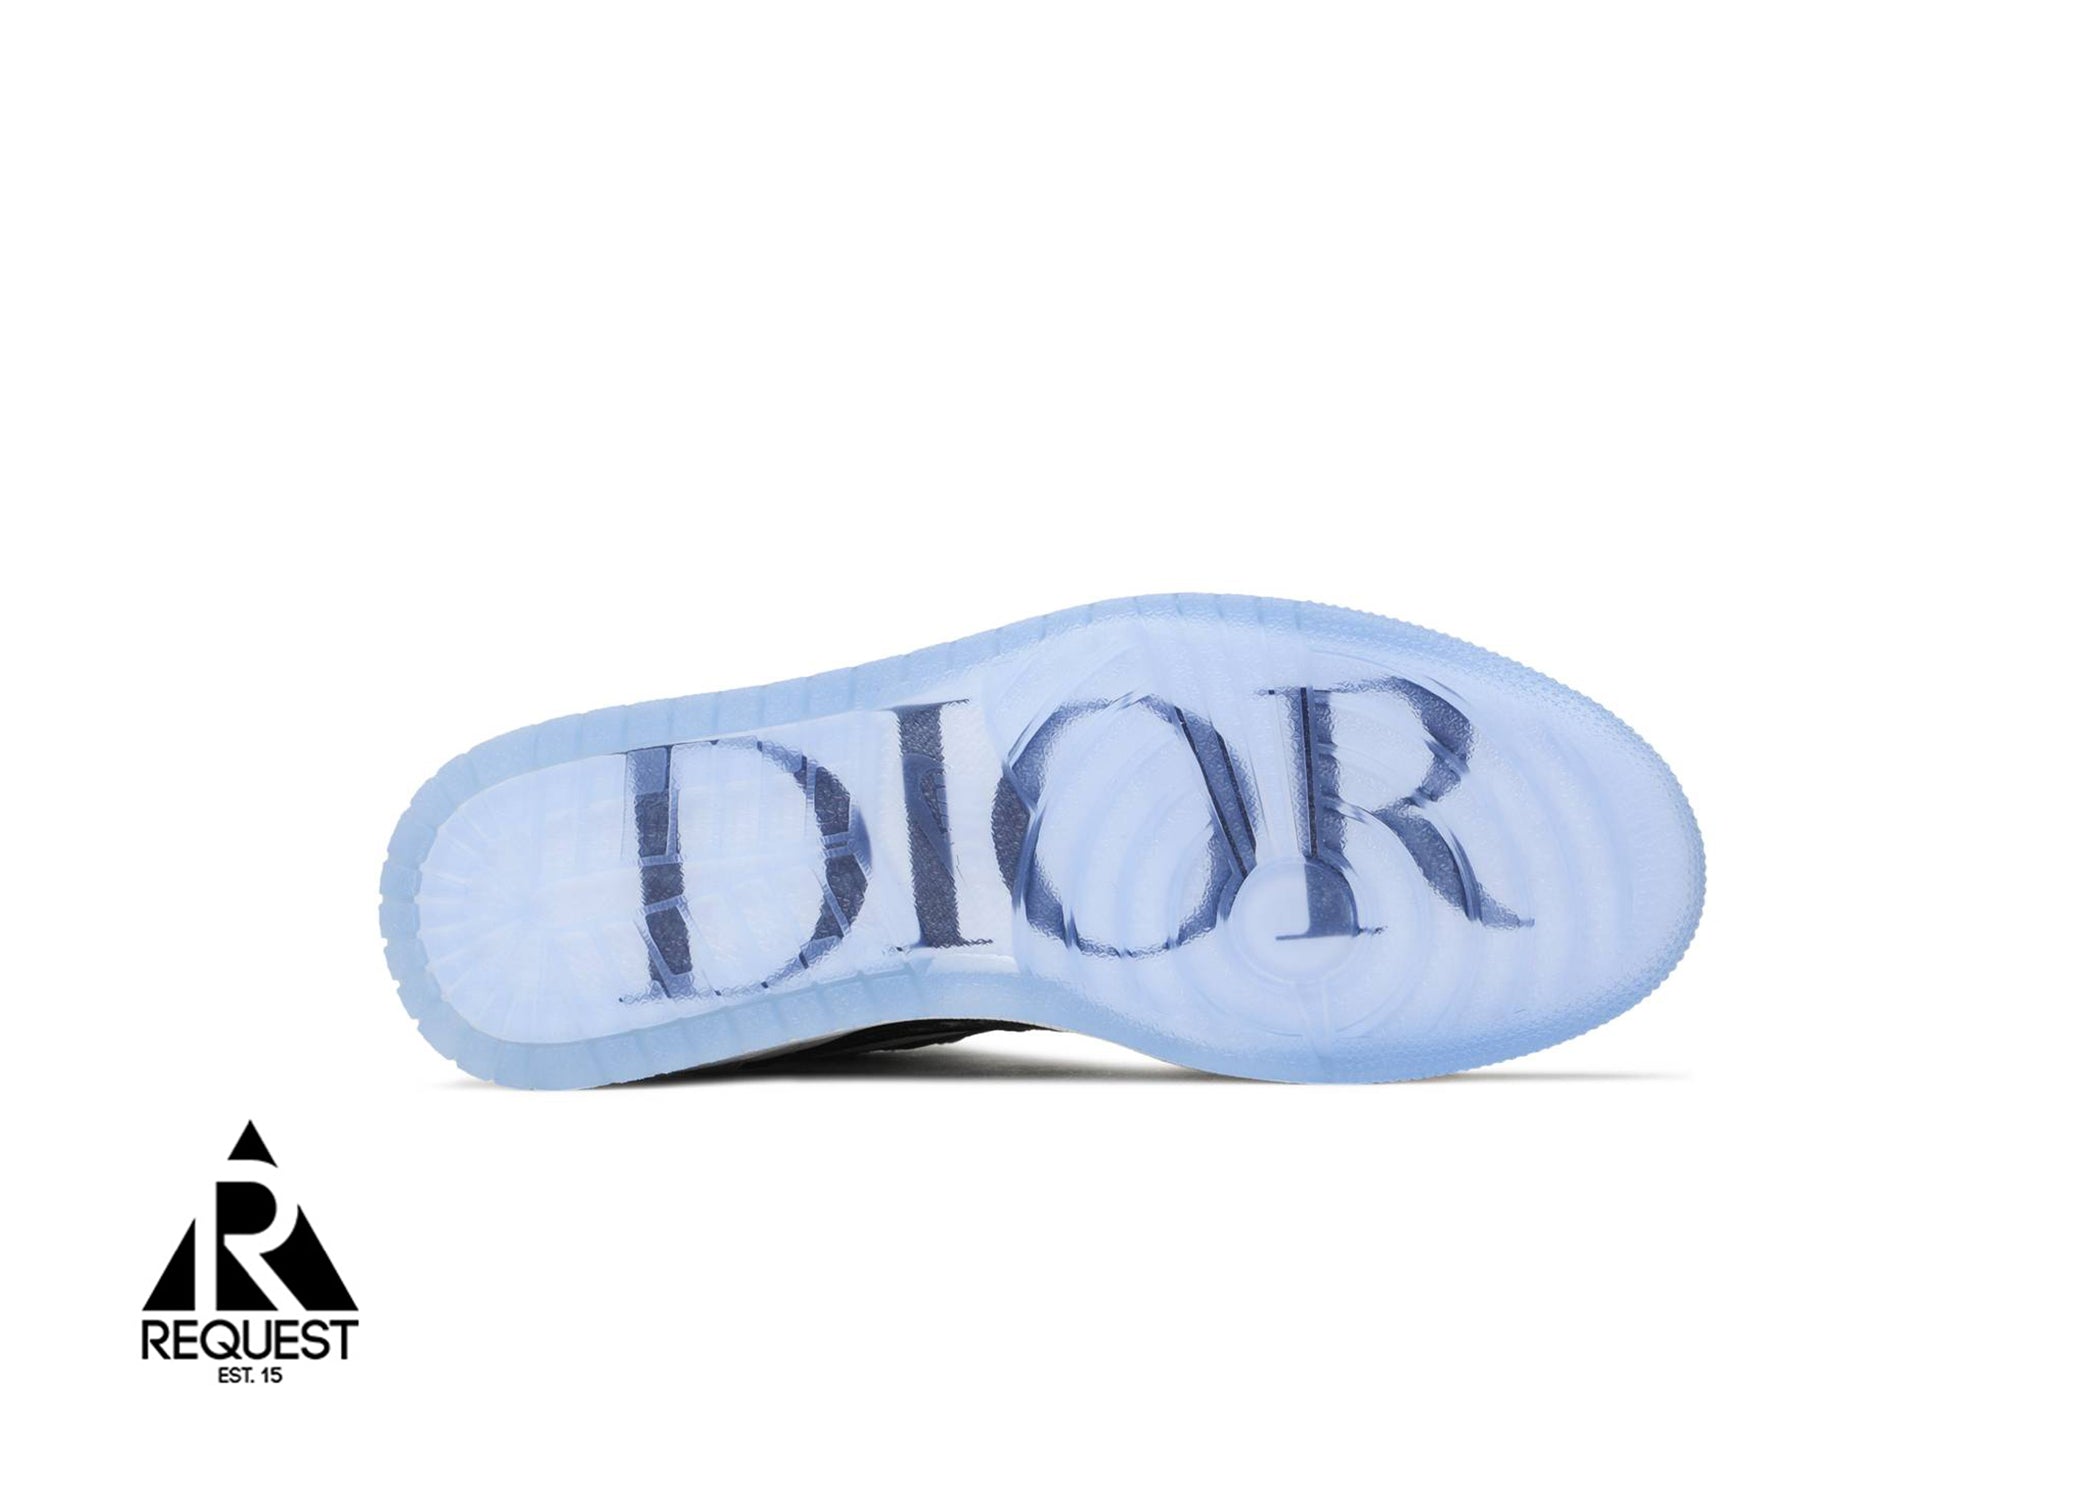 Air Jordan 1 Retro “Dior”